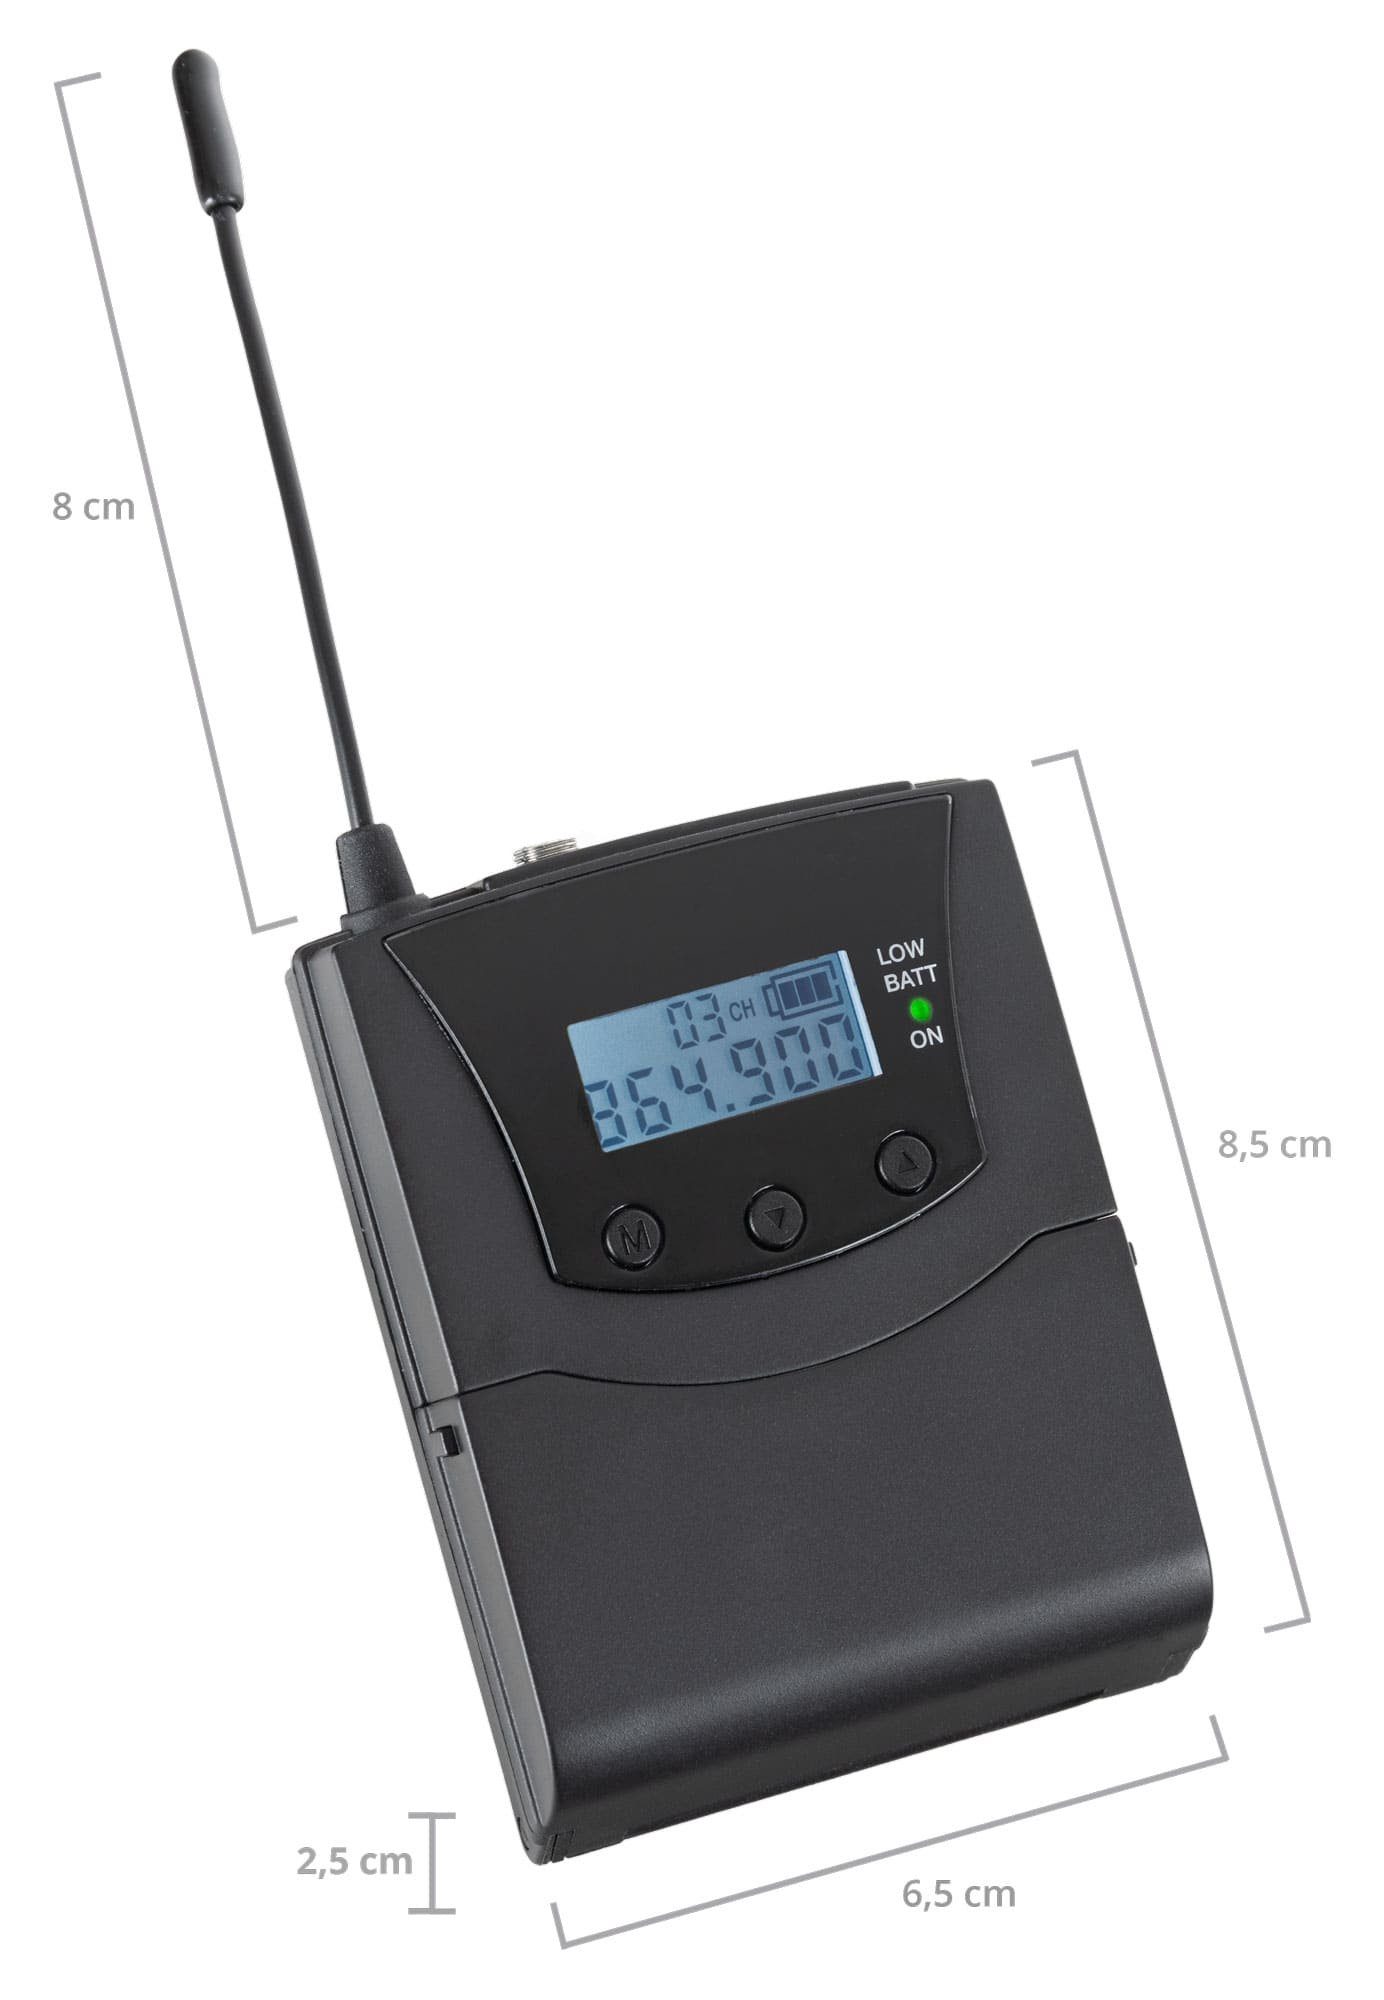 Beatfoxx Silent Guide V2 Funk-Kopfhörer Bodypack-Receiver 10 Tourguide-Set Set Economy UHF-Technik, Stereo inkl. Kopfhörer) (Dezentes empfangbare Funk-Empfänger, Kanäle 10 3 mit